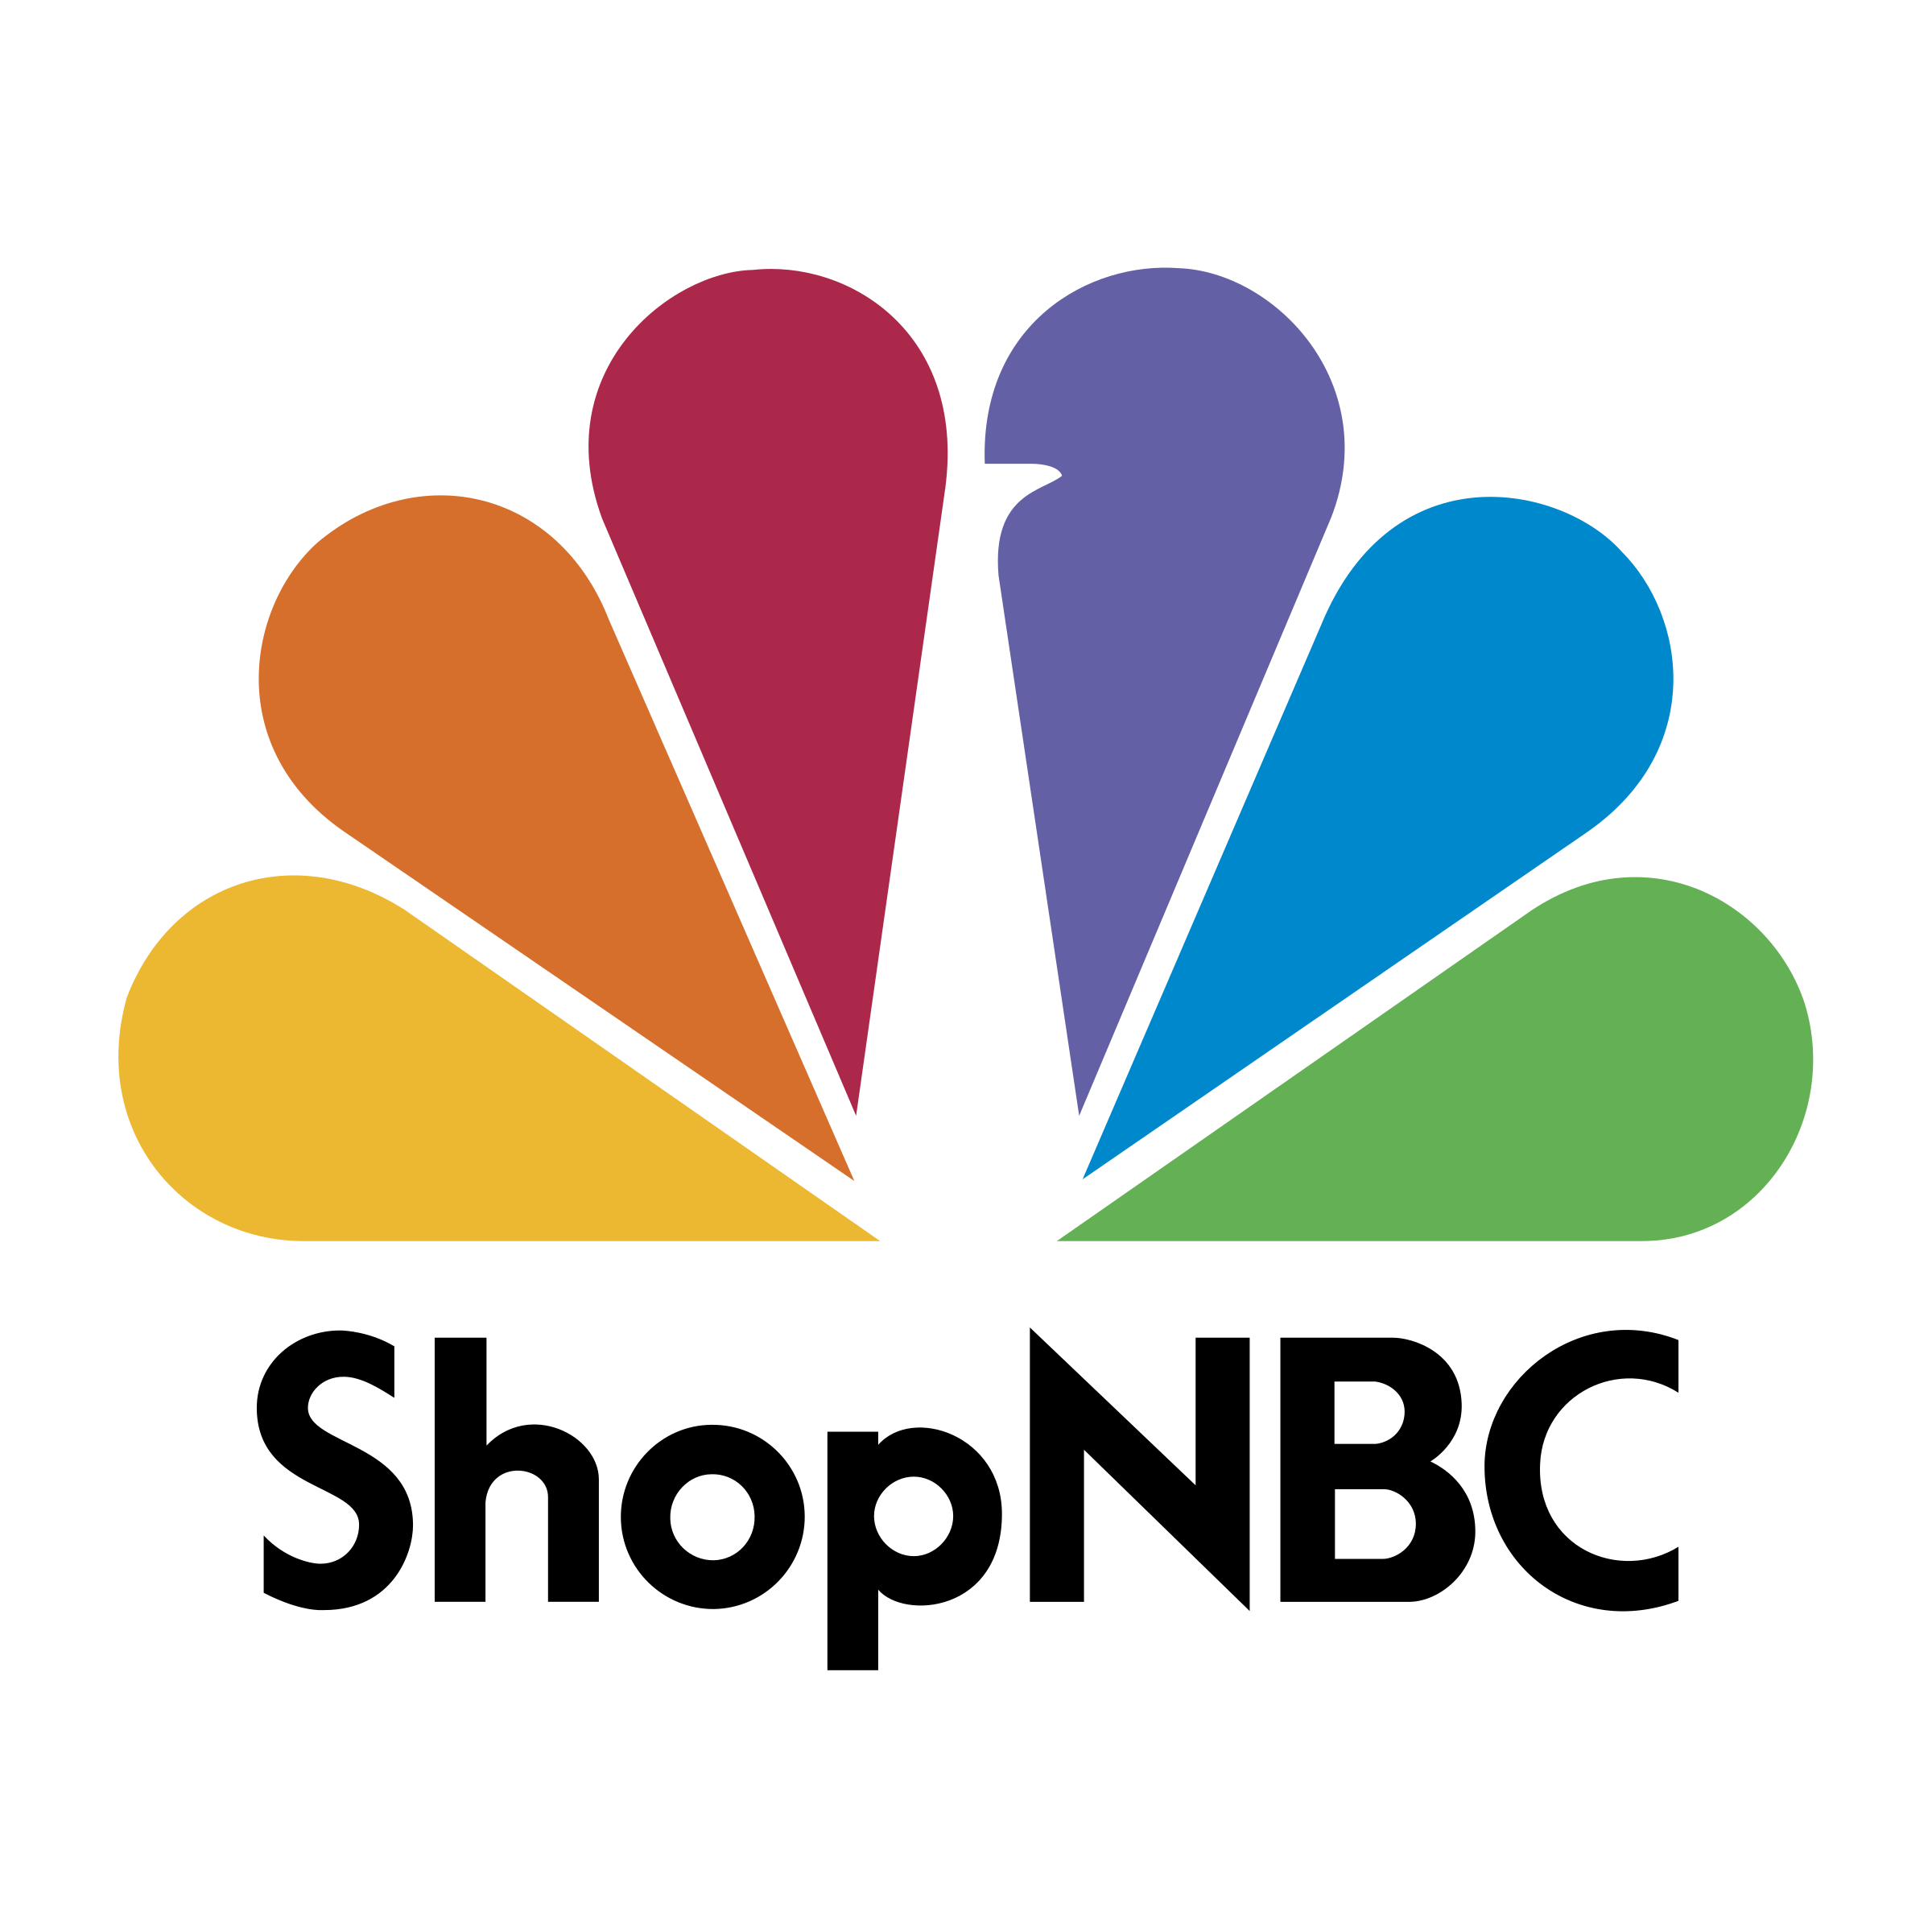 ShopNBC Logo - ShopNBC Logo PNG Transparent & SVG Vector - Freebie Supply